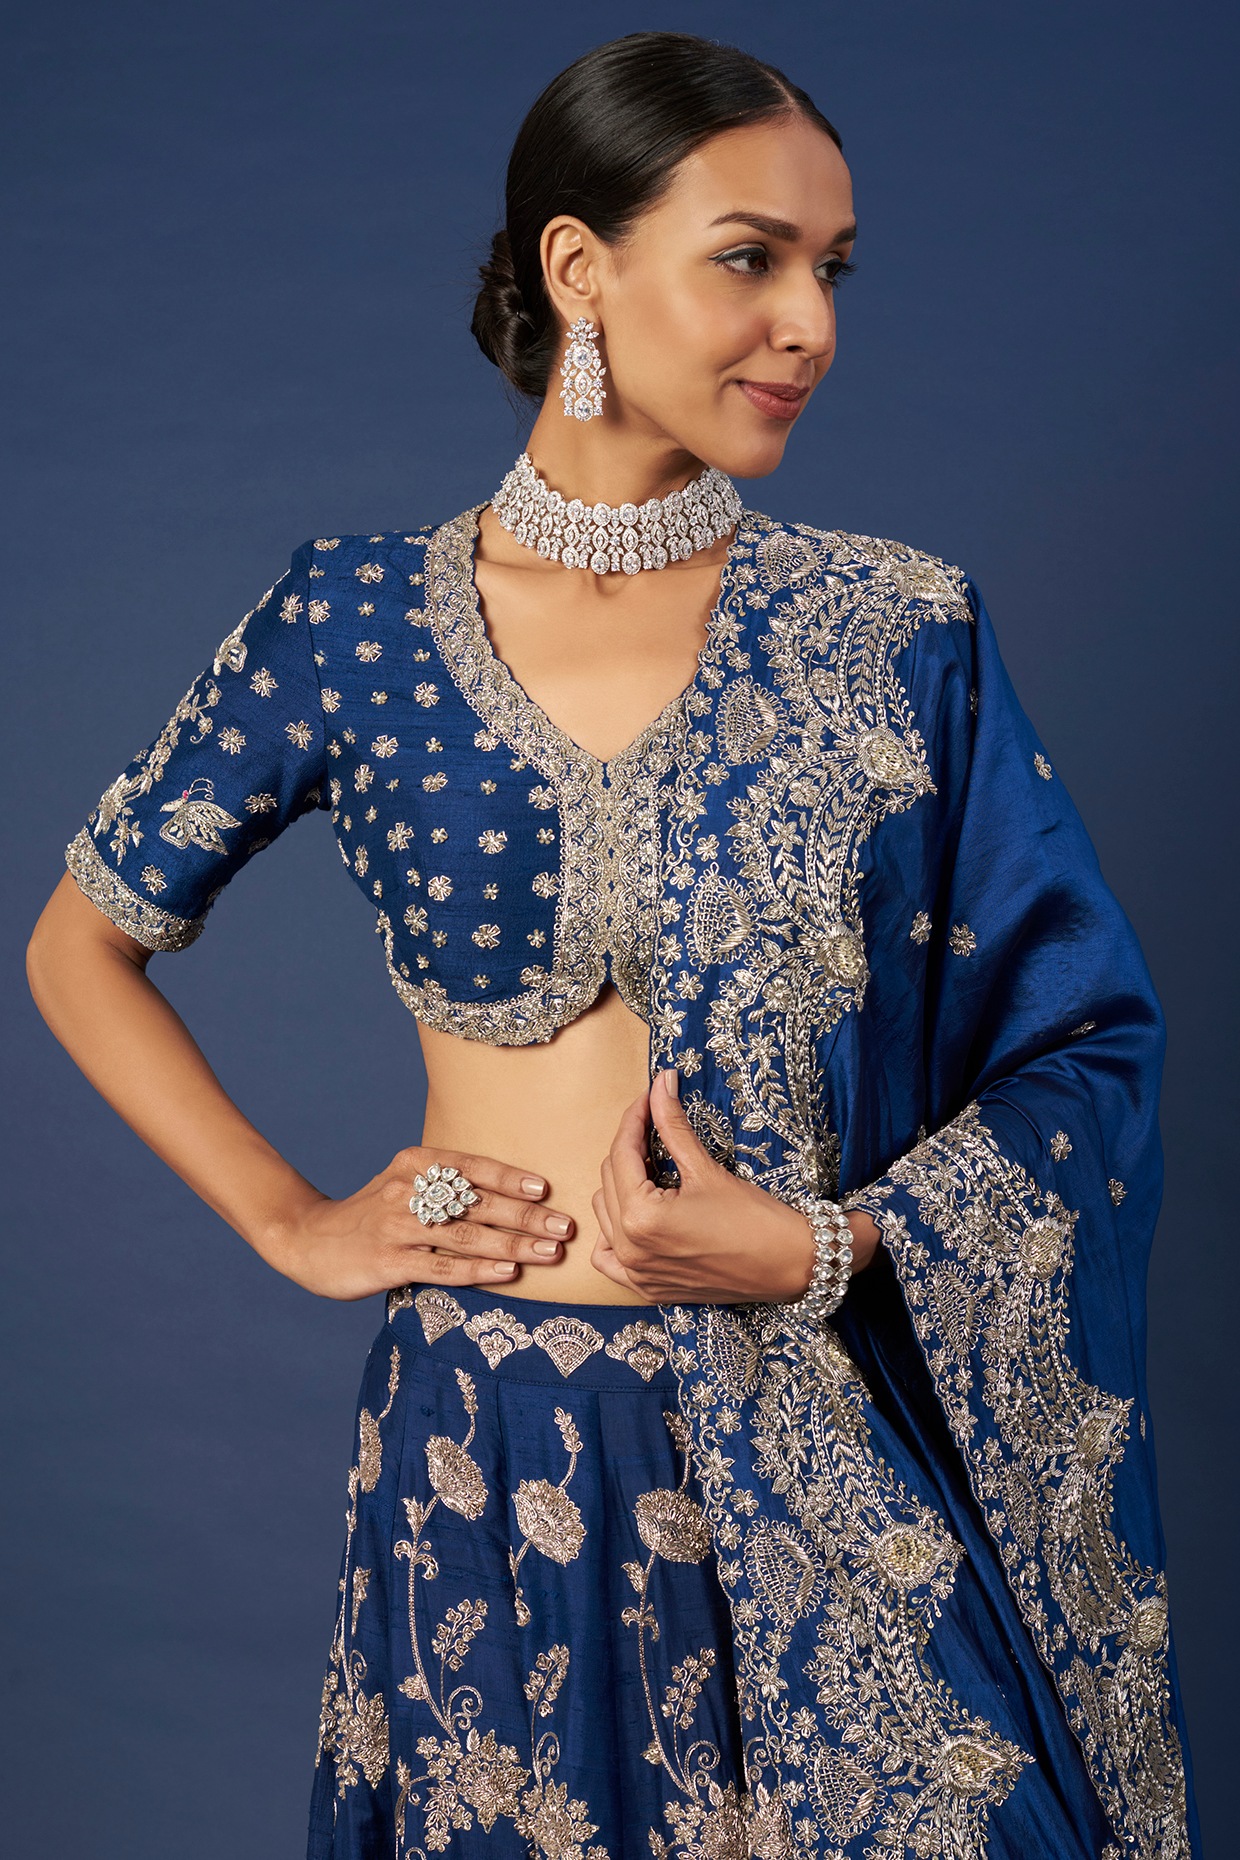 Aqua Blue Pearl Embroidered Indian Wedding Lehenga Choli in USA, UK